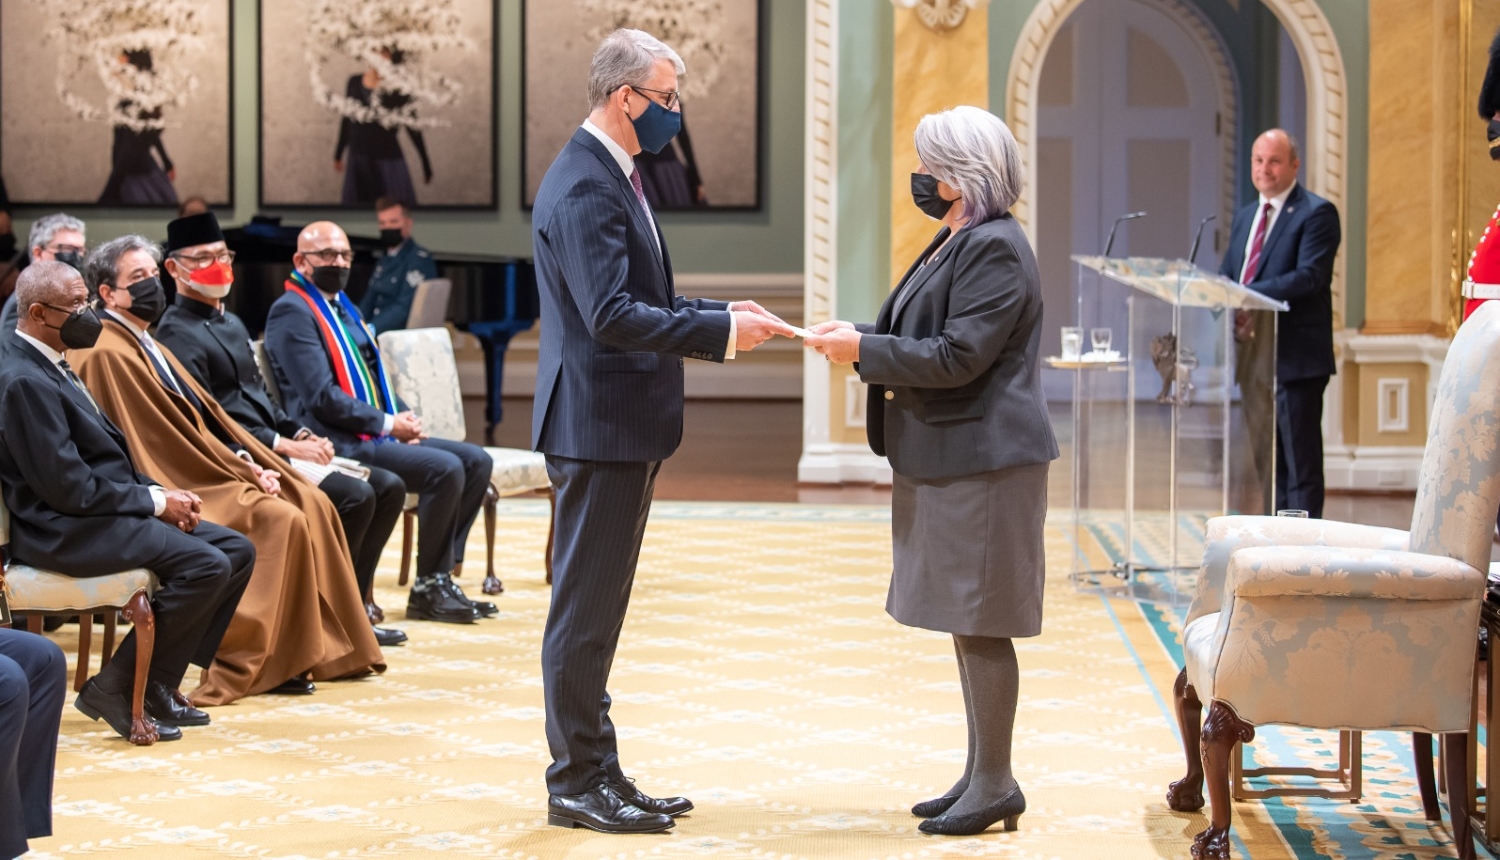 The Ambassador of Latvia, Kaspars Ozoliņš, presents credentials to the Governor General of Canada 